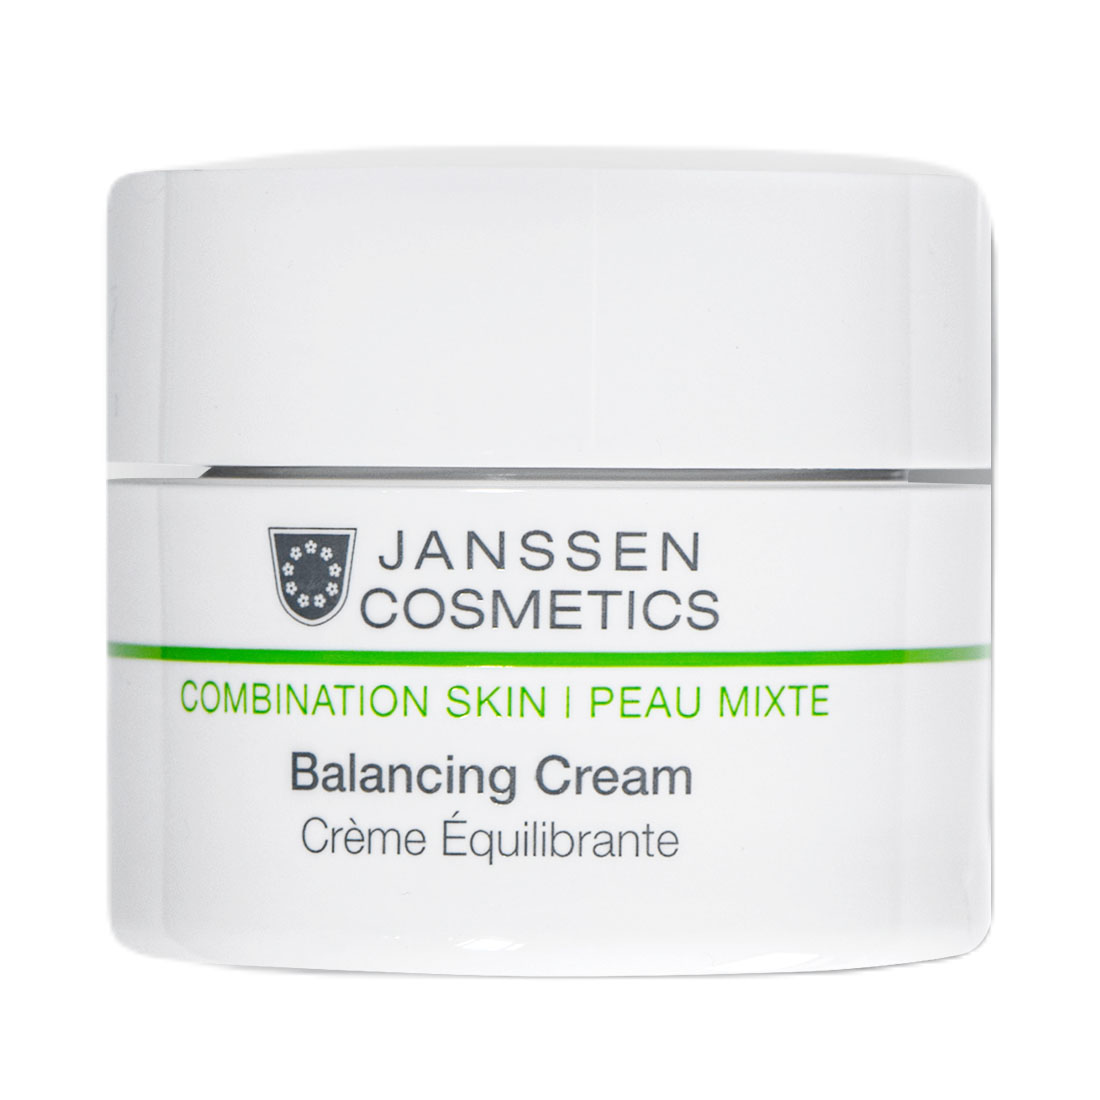 цена Janssen Cosmetics Балансирующий крем Balancing Cream, 50 мл (Janssen Cosmetics, Combination skin)